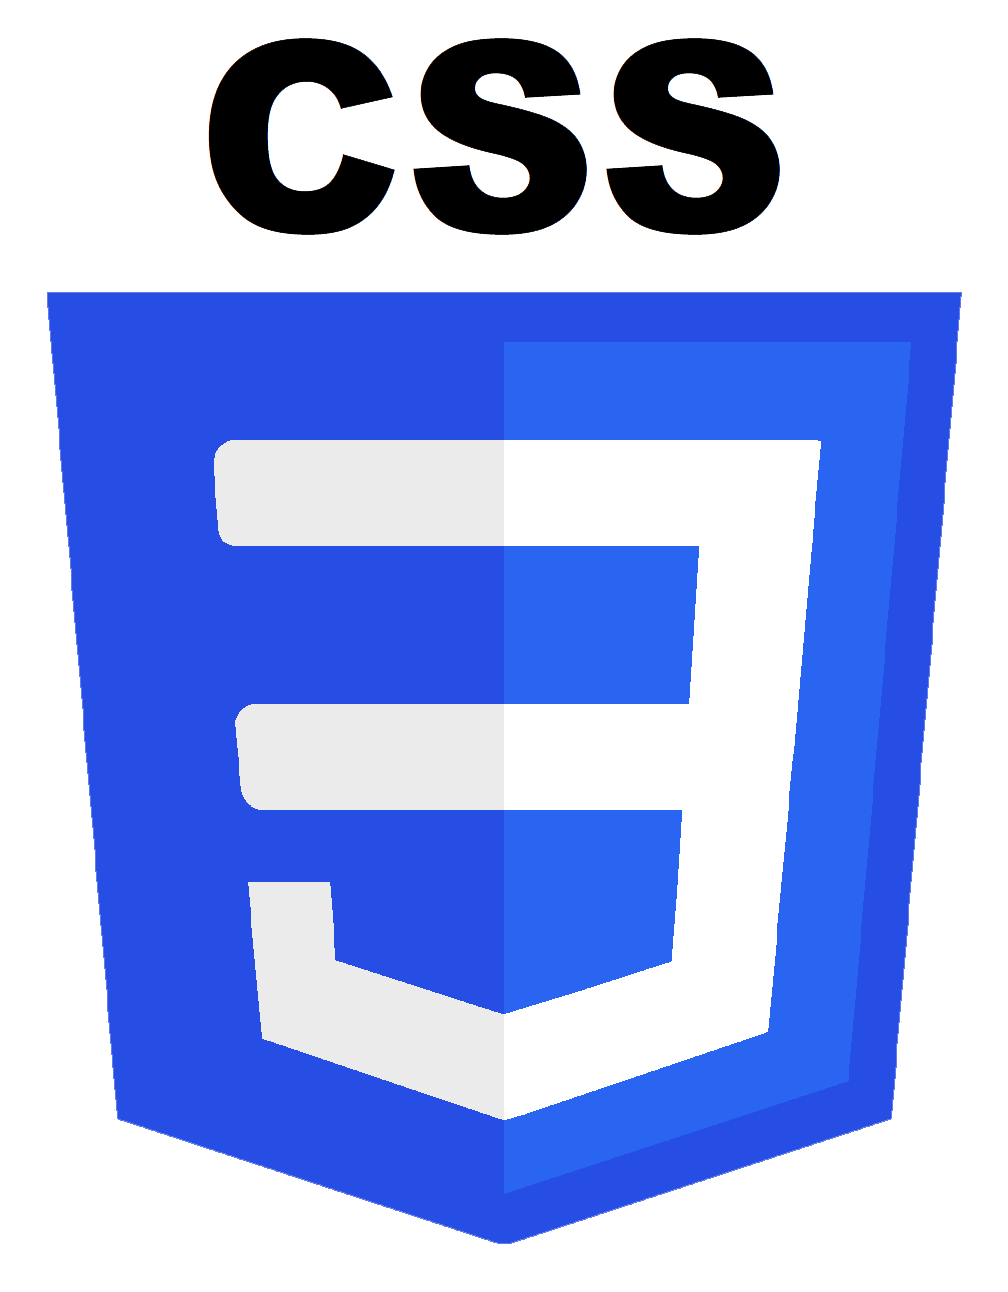 Div картинки. Иконка CSS. CSS лого. Css3 логотип. Иконка css3.